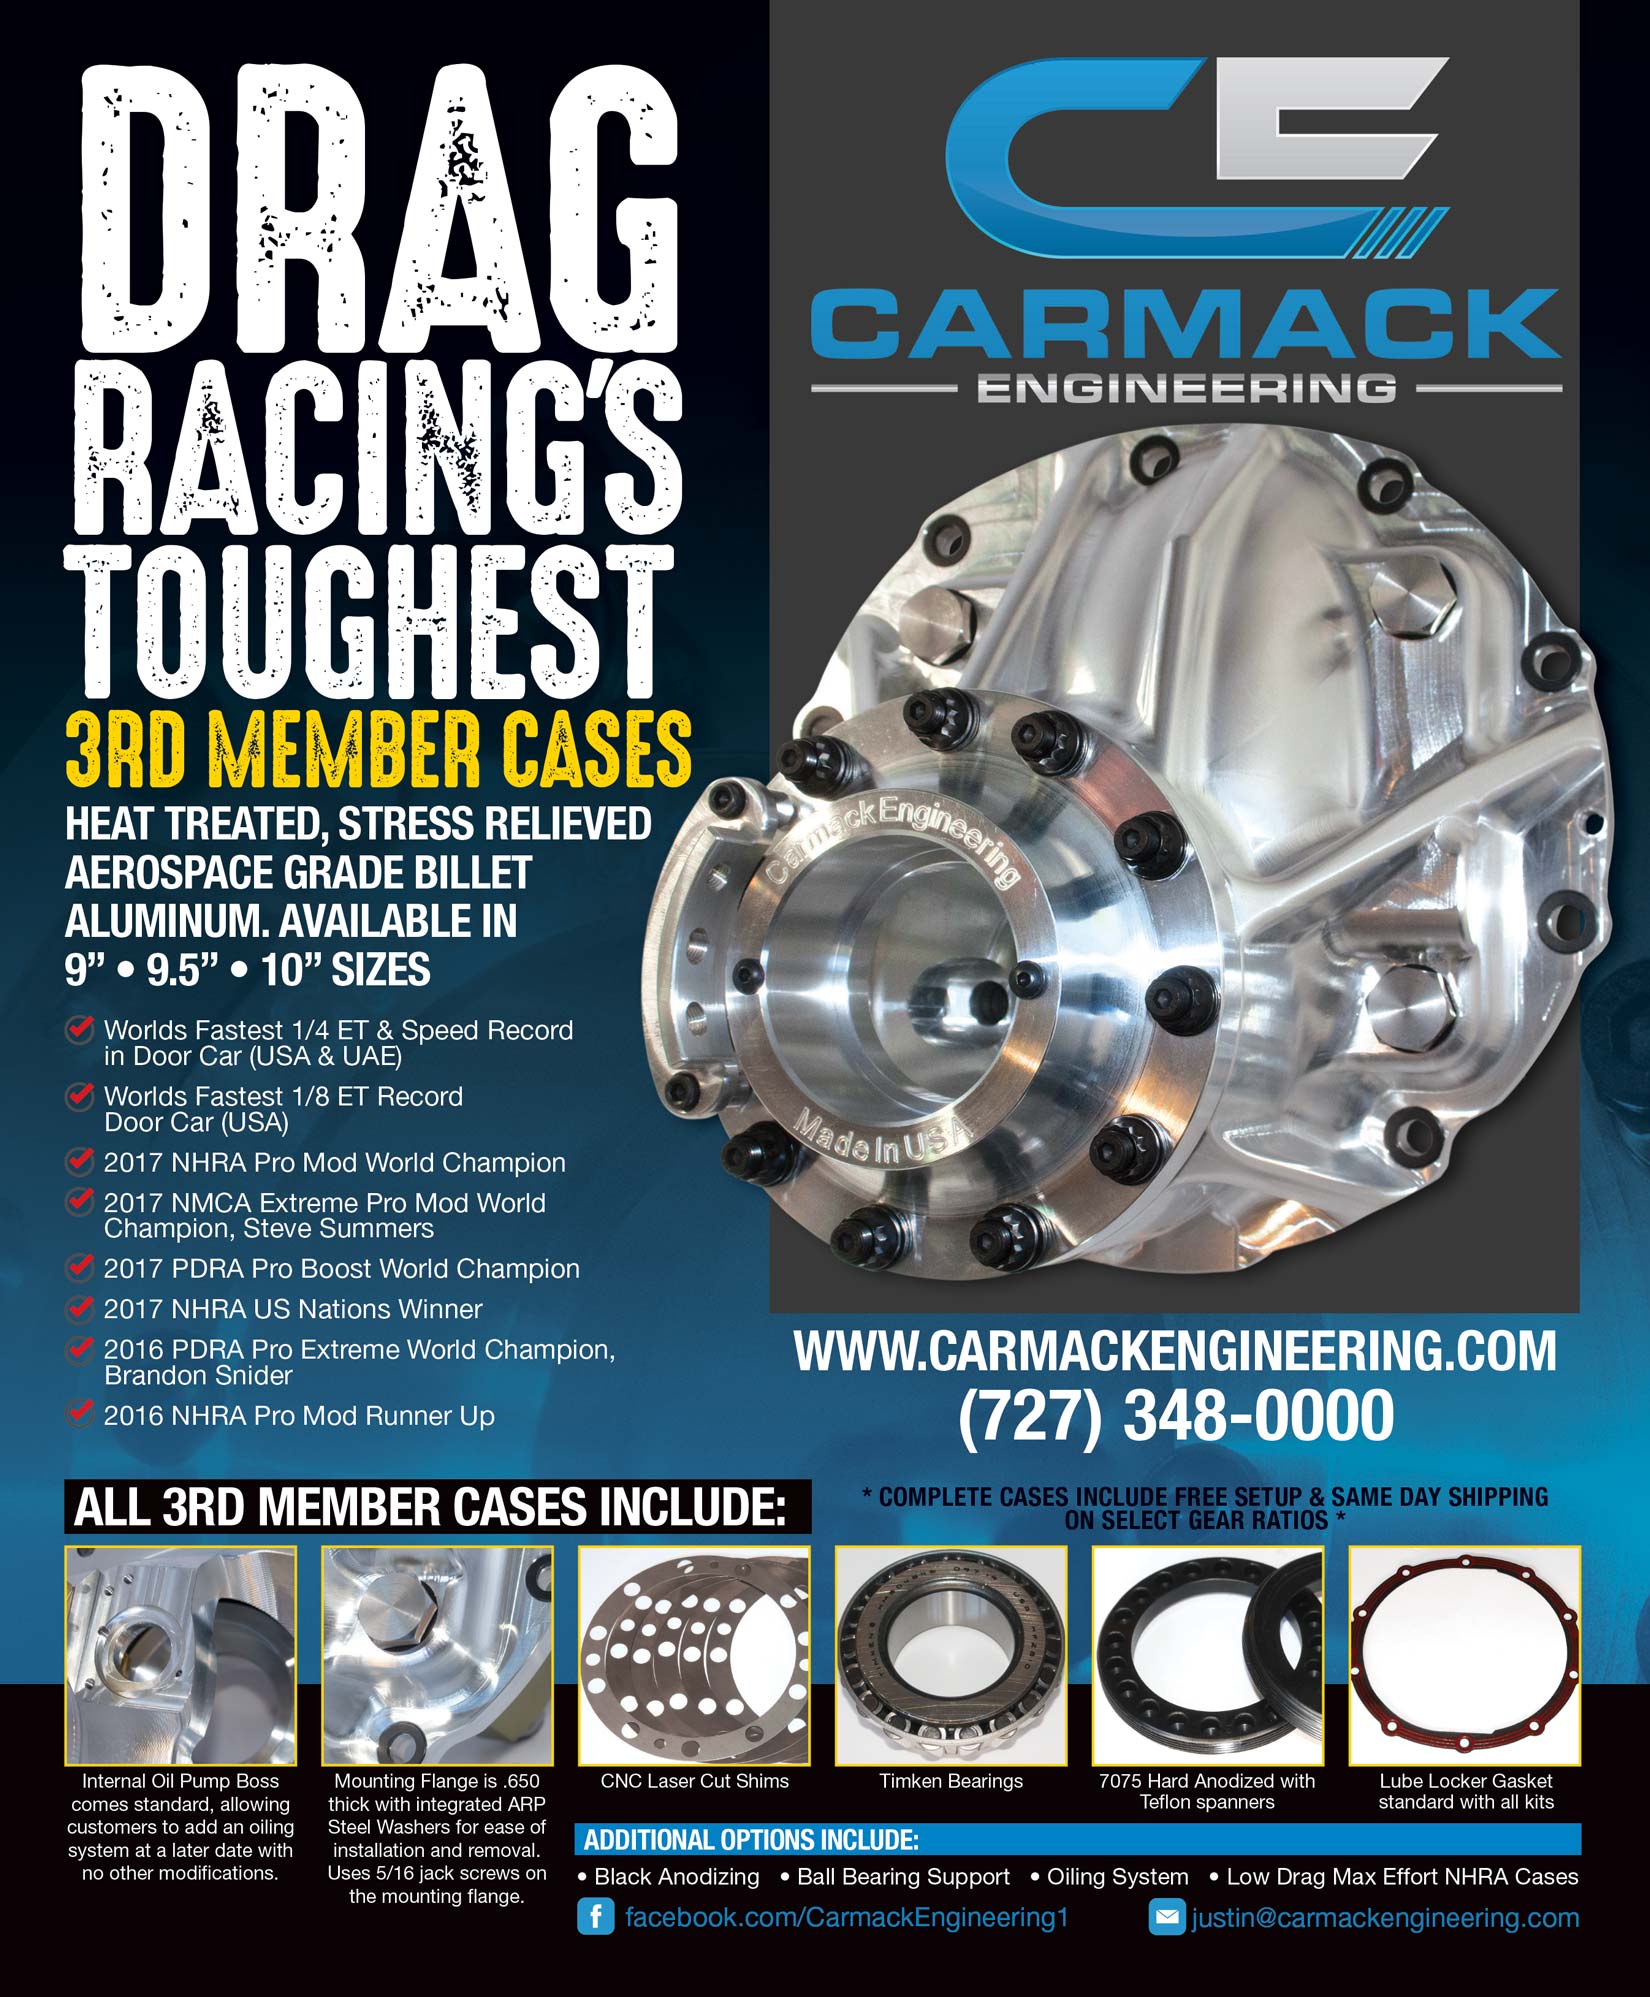 Carmack Engineering 3RD Member Cases Info